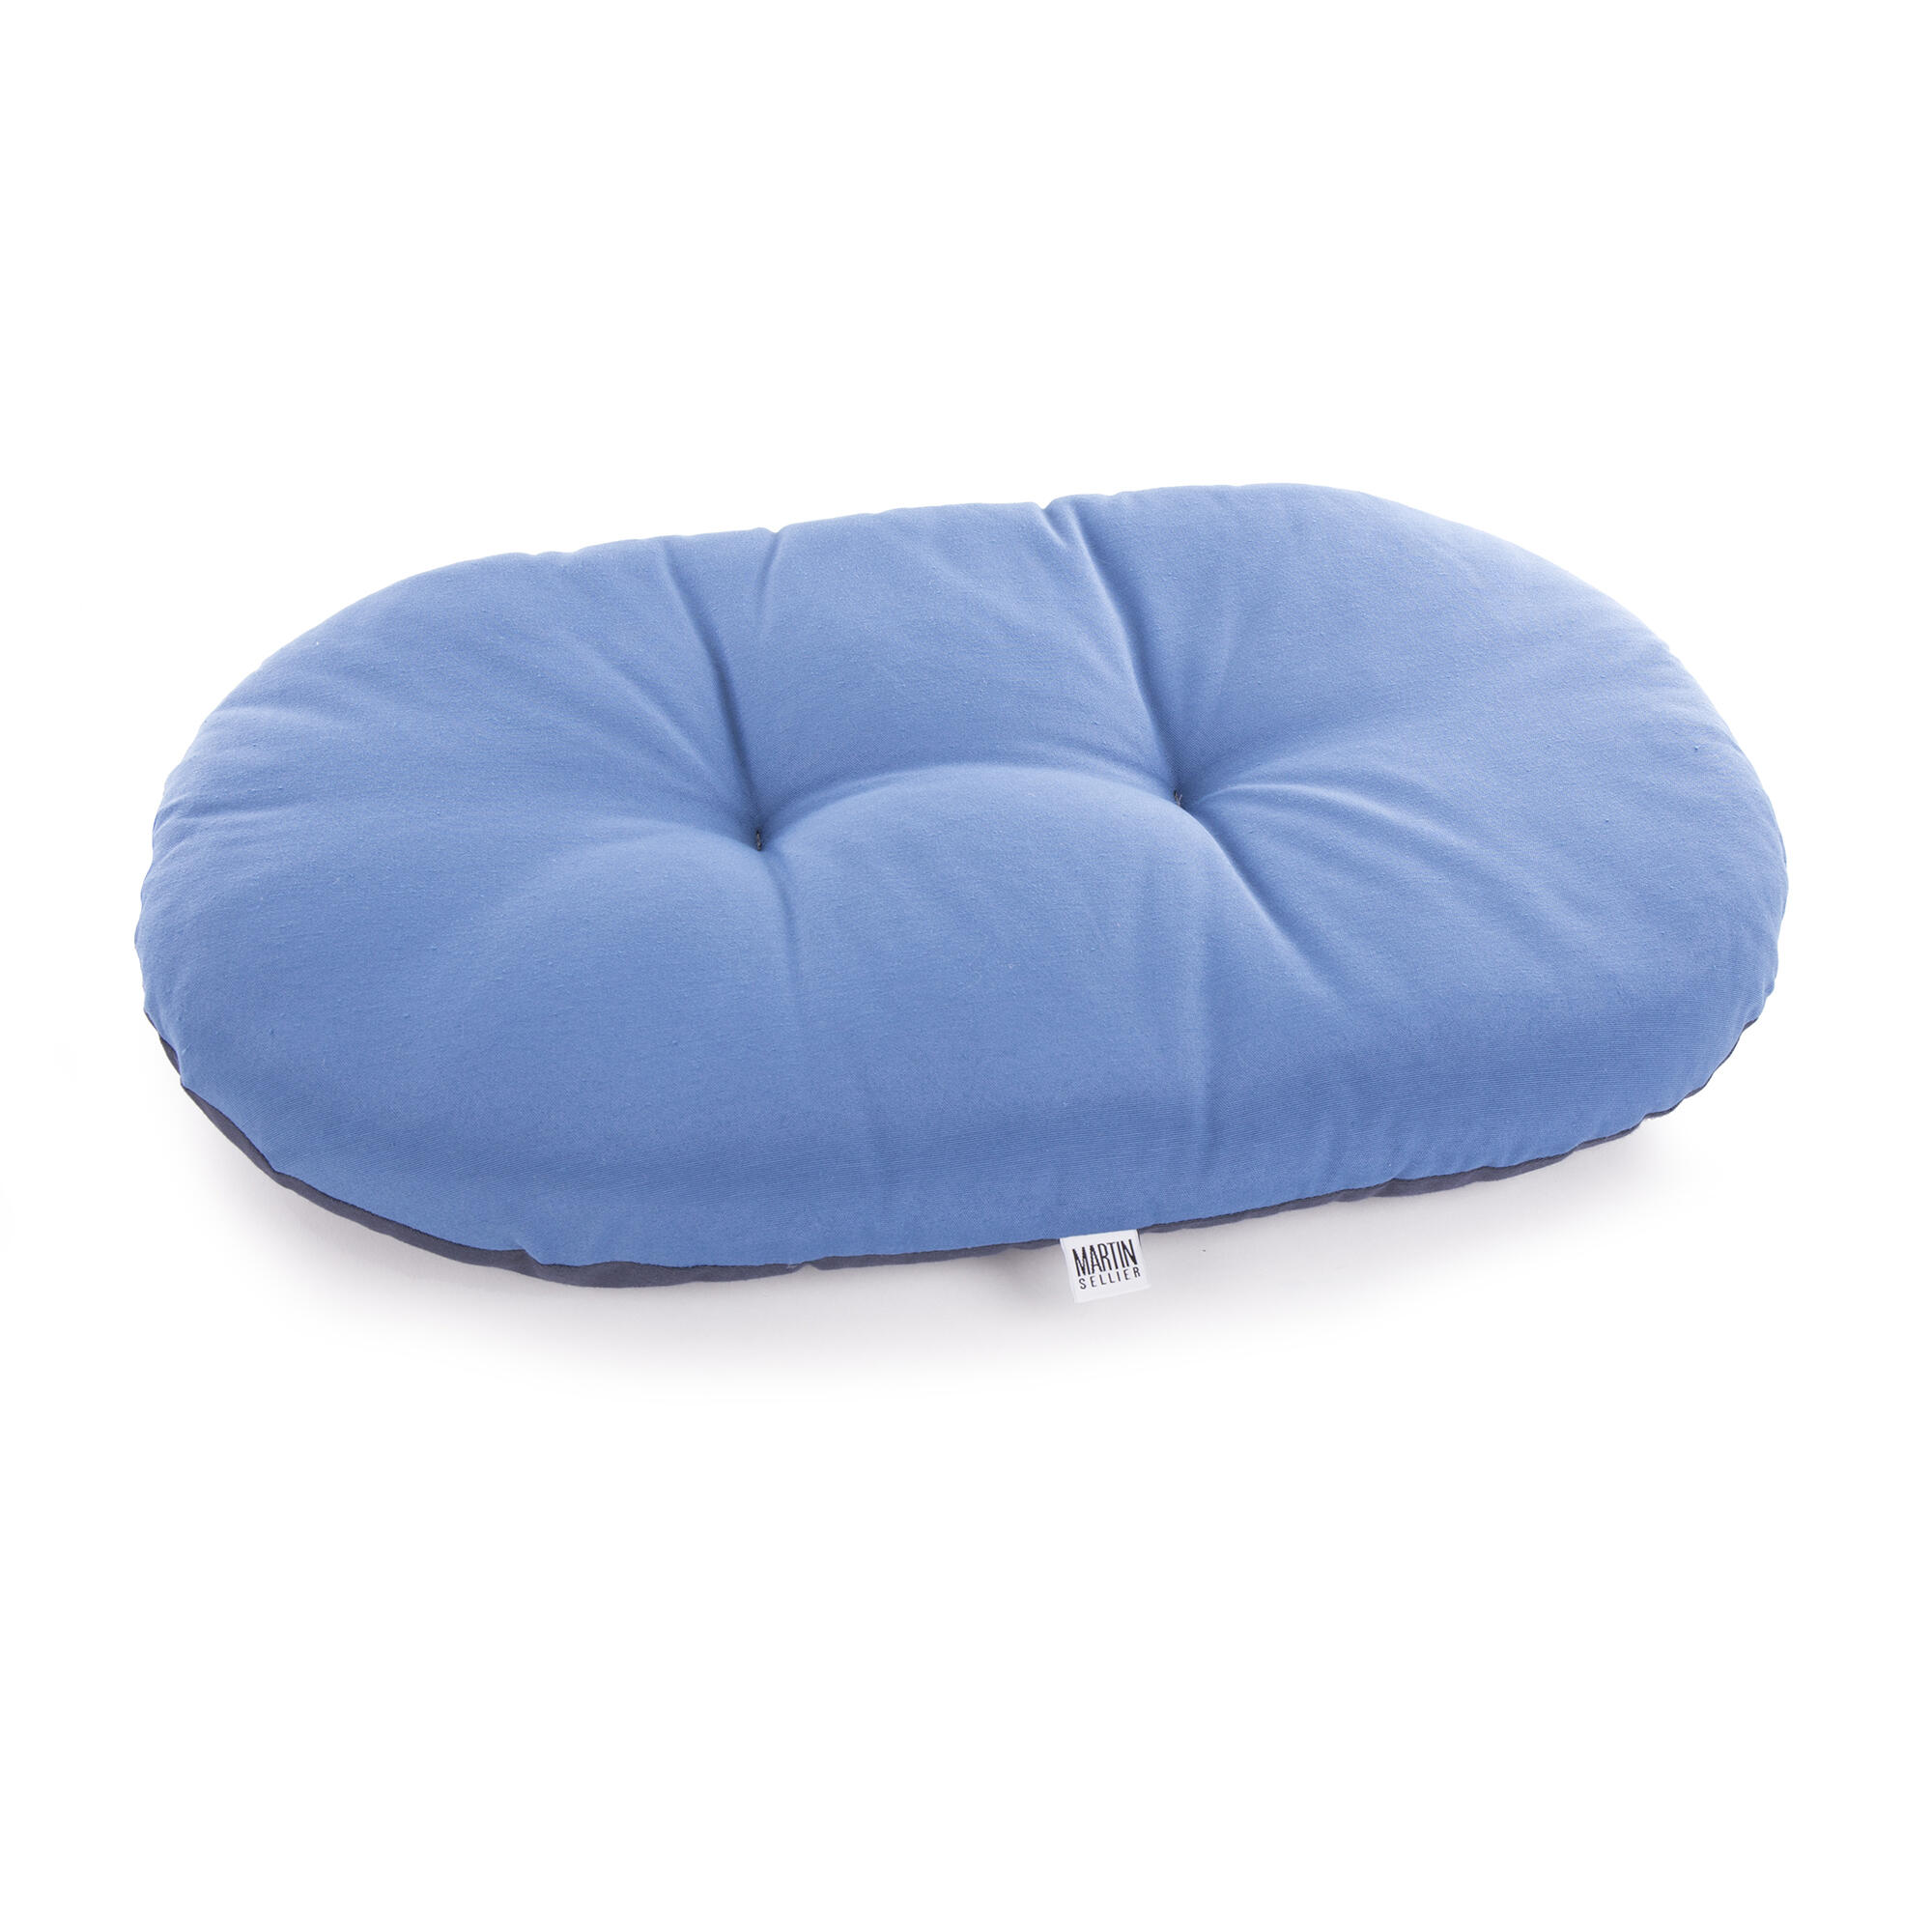 MARTIN SELLIER Oval wadded dog cushion, blue.